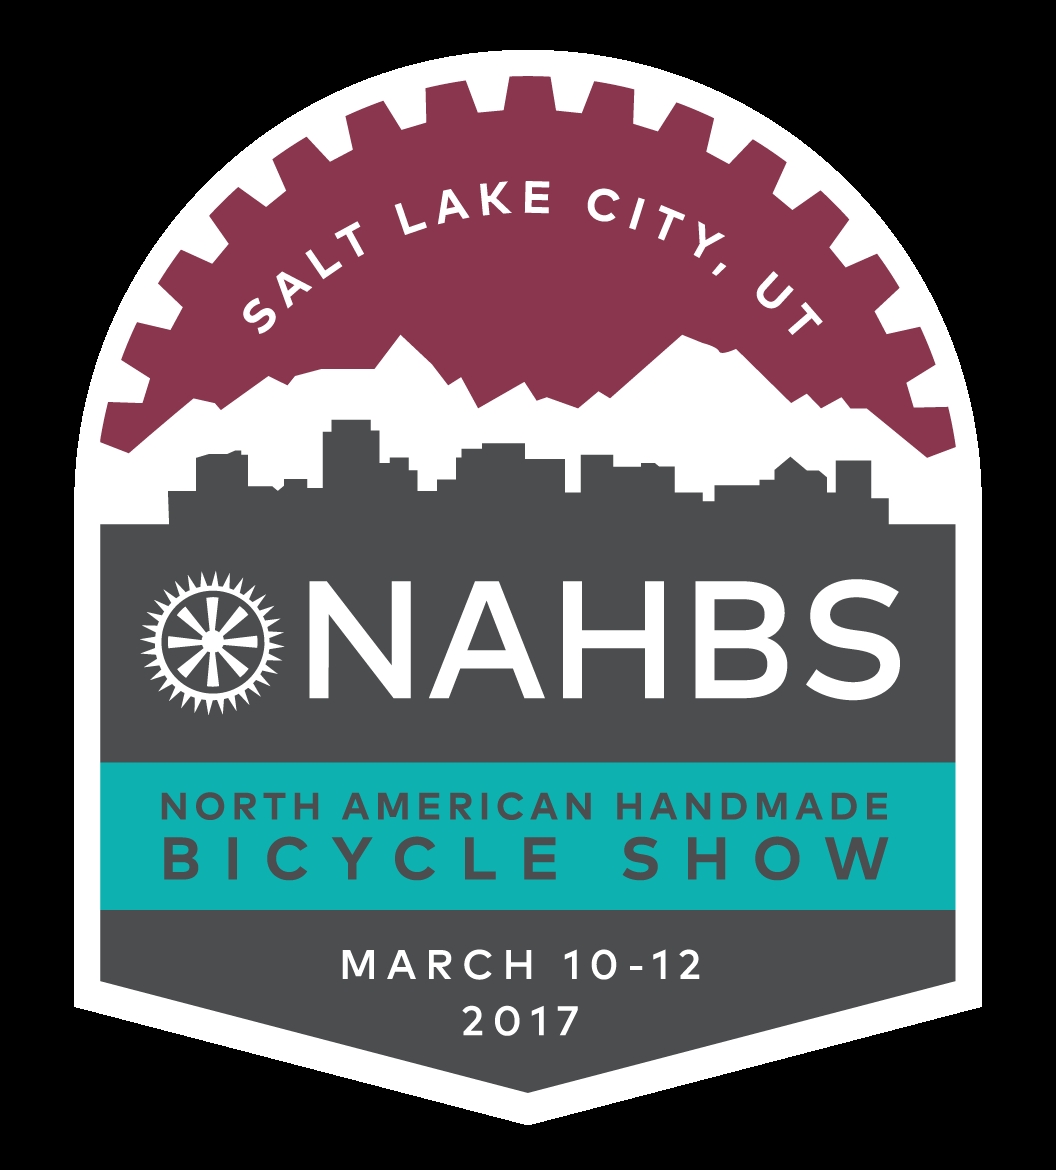 North American Handmade Bicycle Show